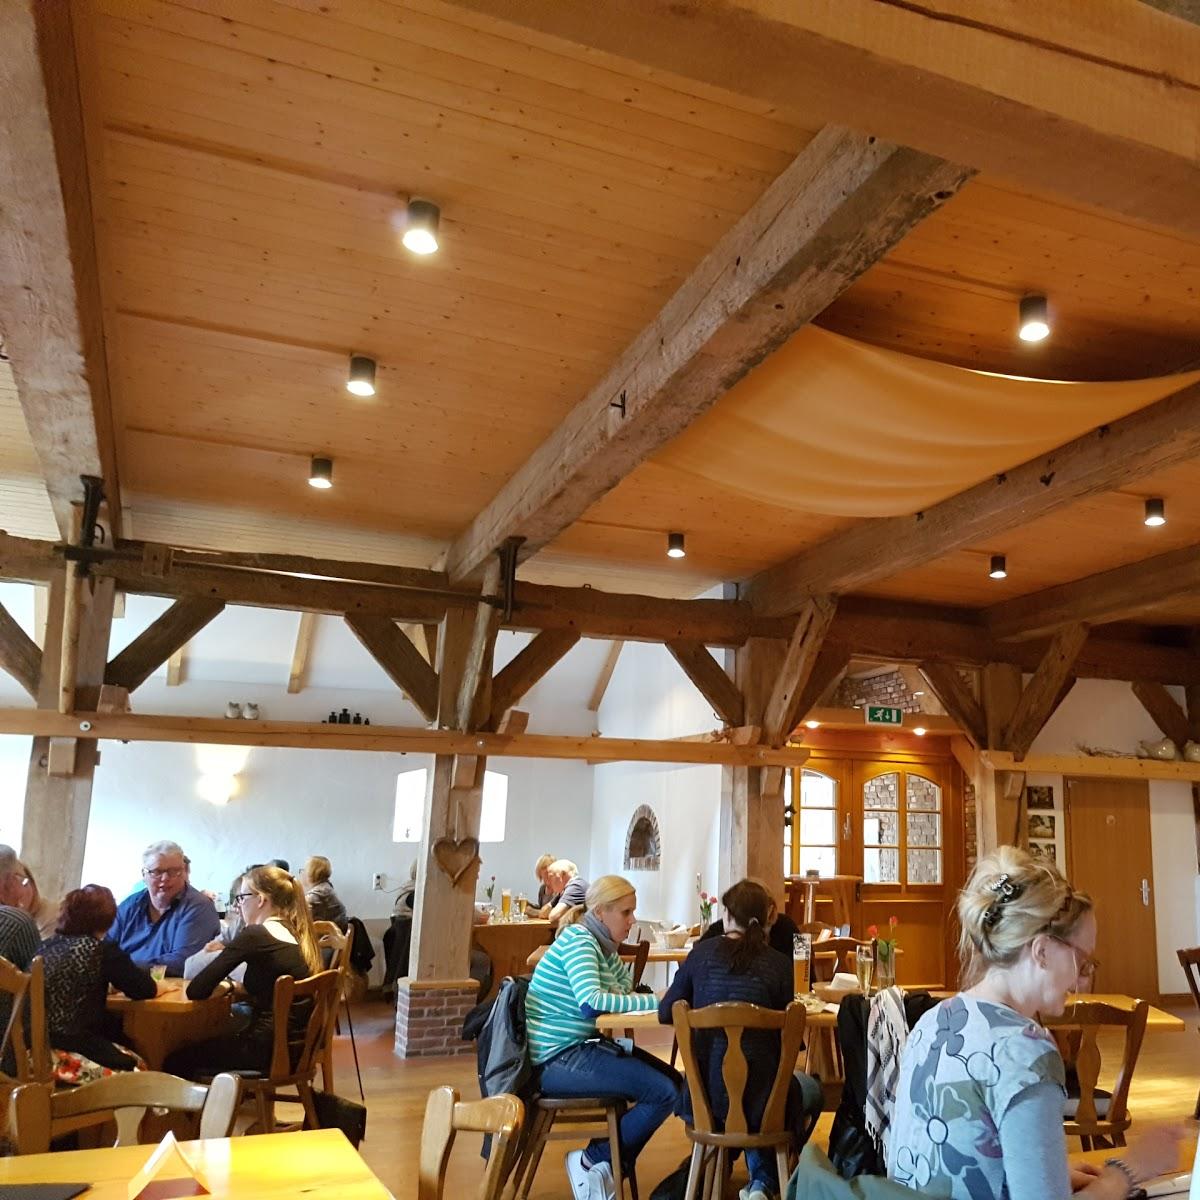 Restaurant "Hof Siats" in Wurster Nordseeküste